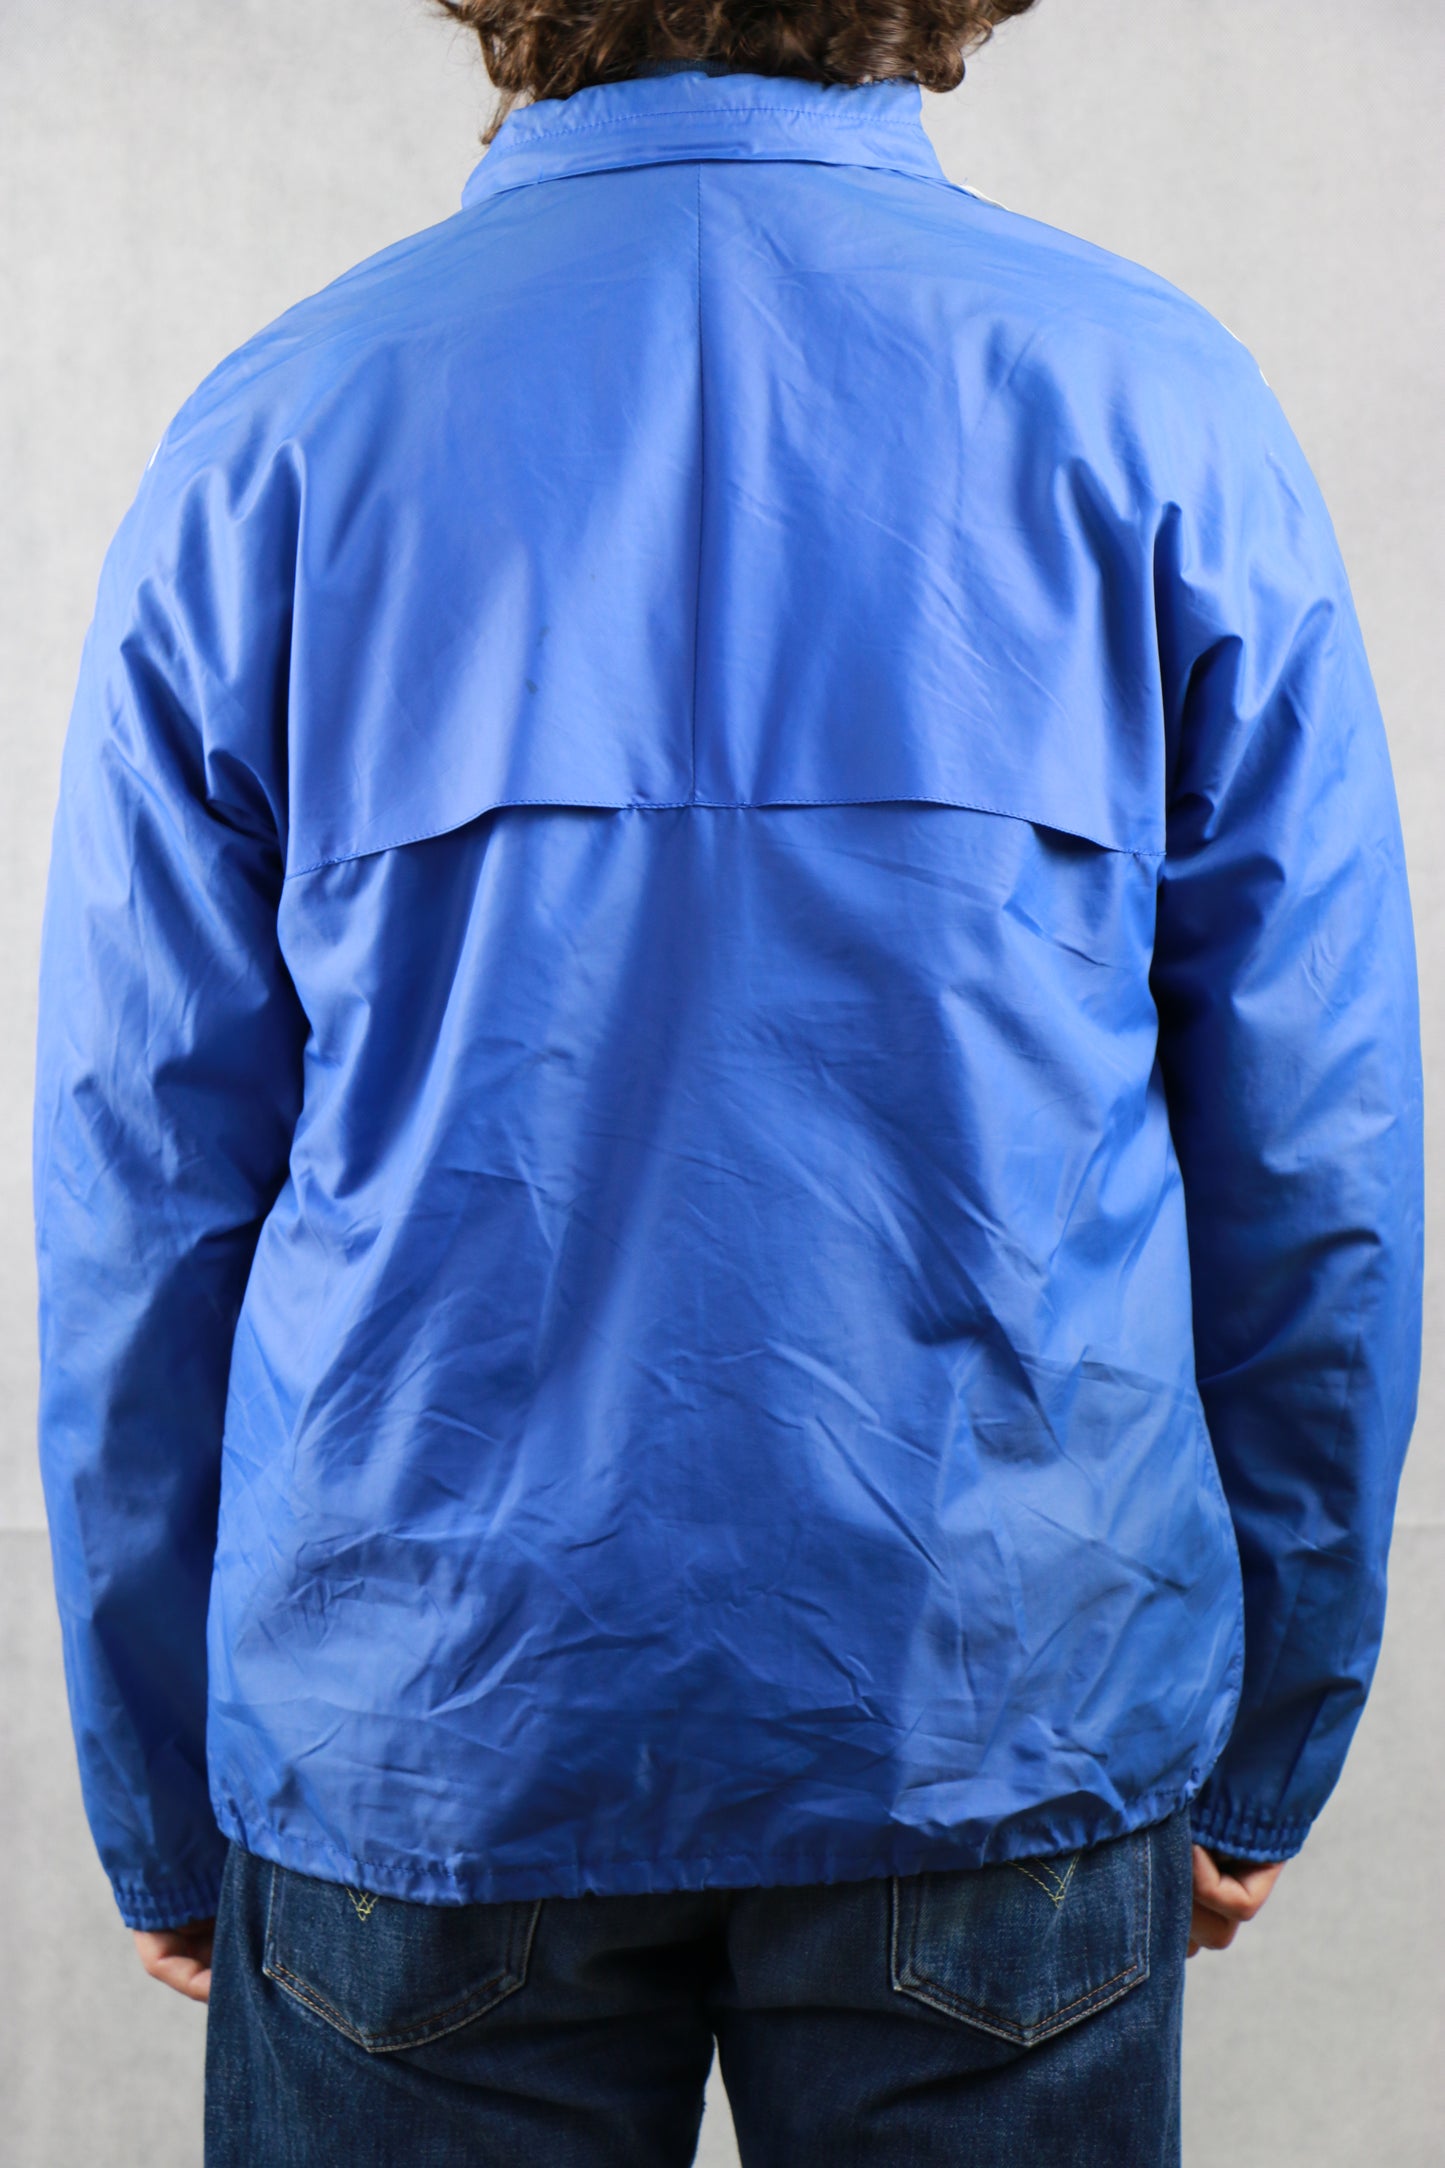 Adidas Rain Jacket Blue - vintage clothing clochard92.com